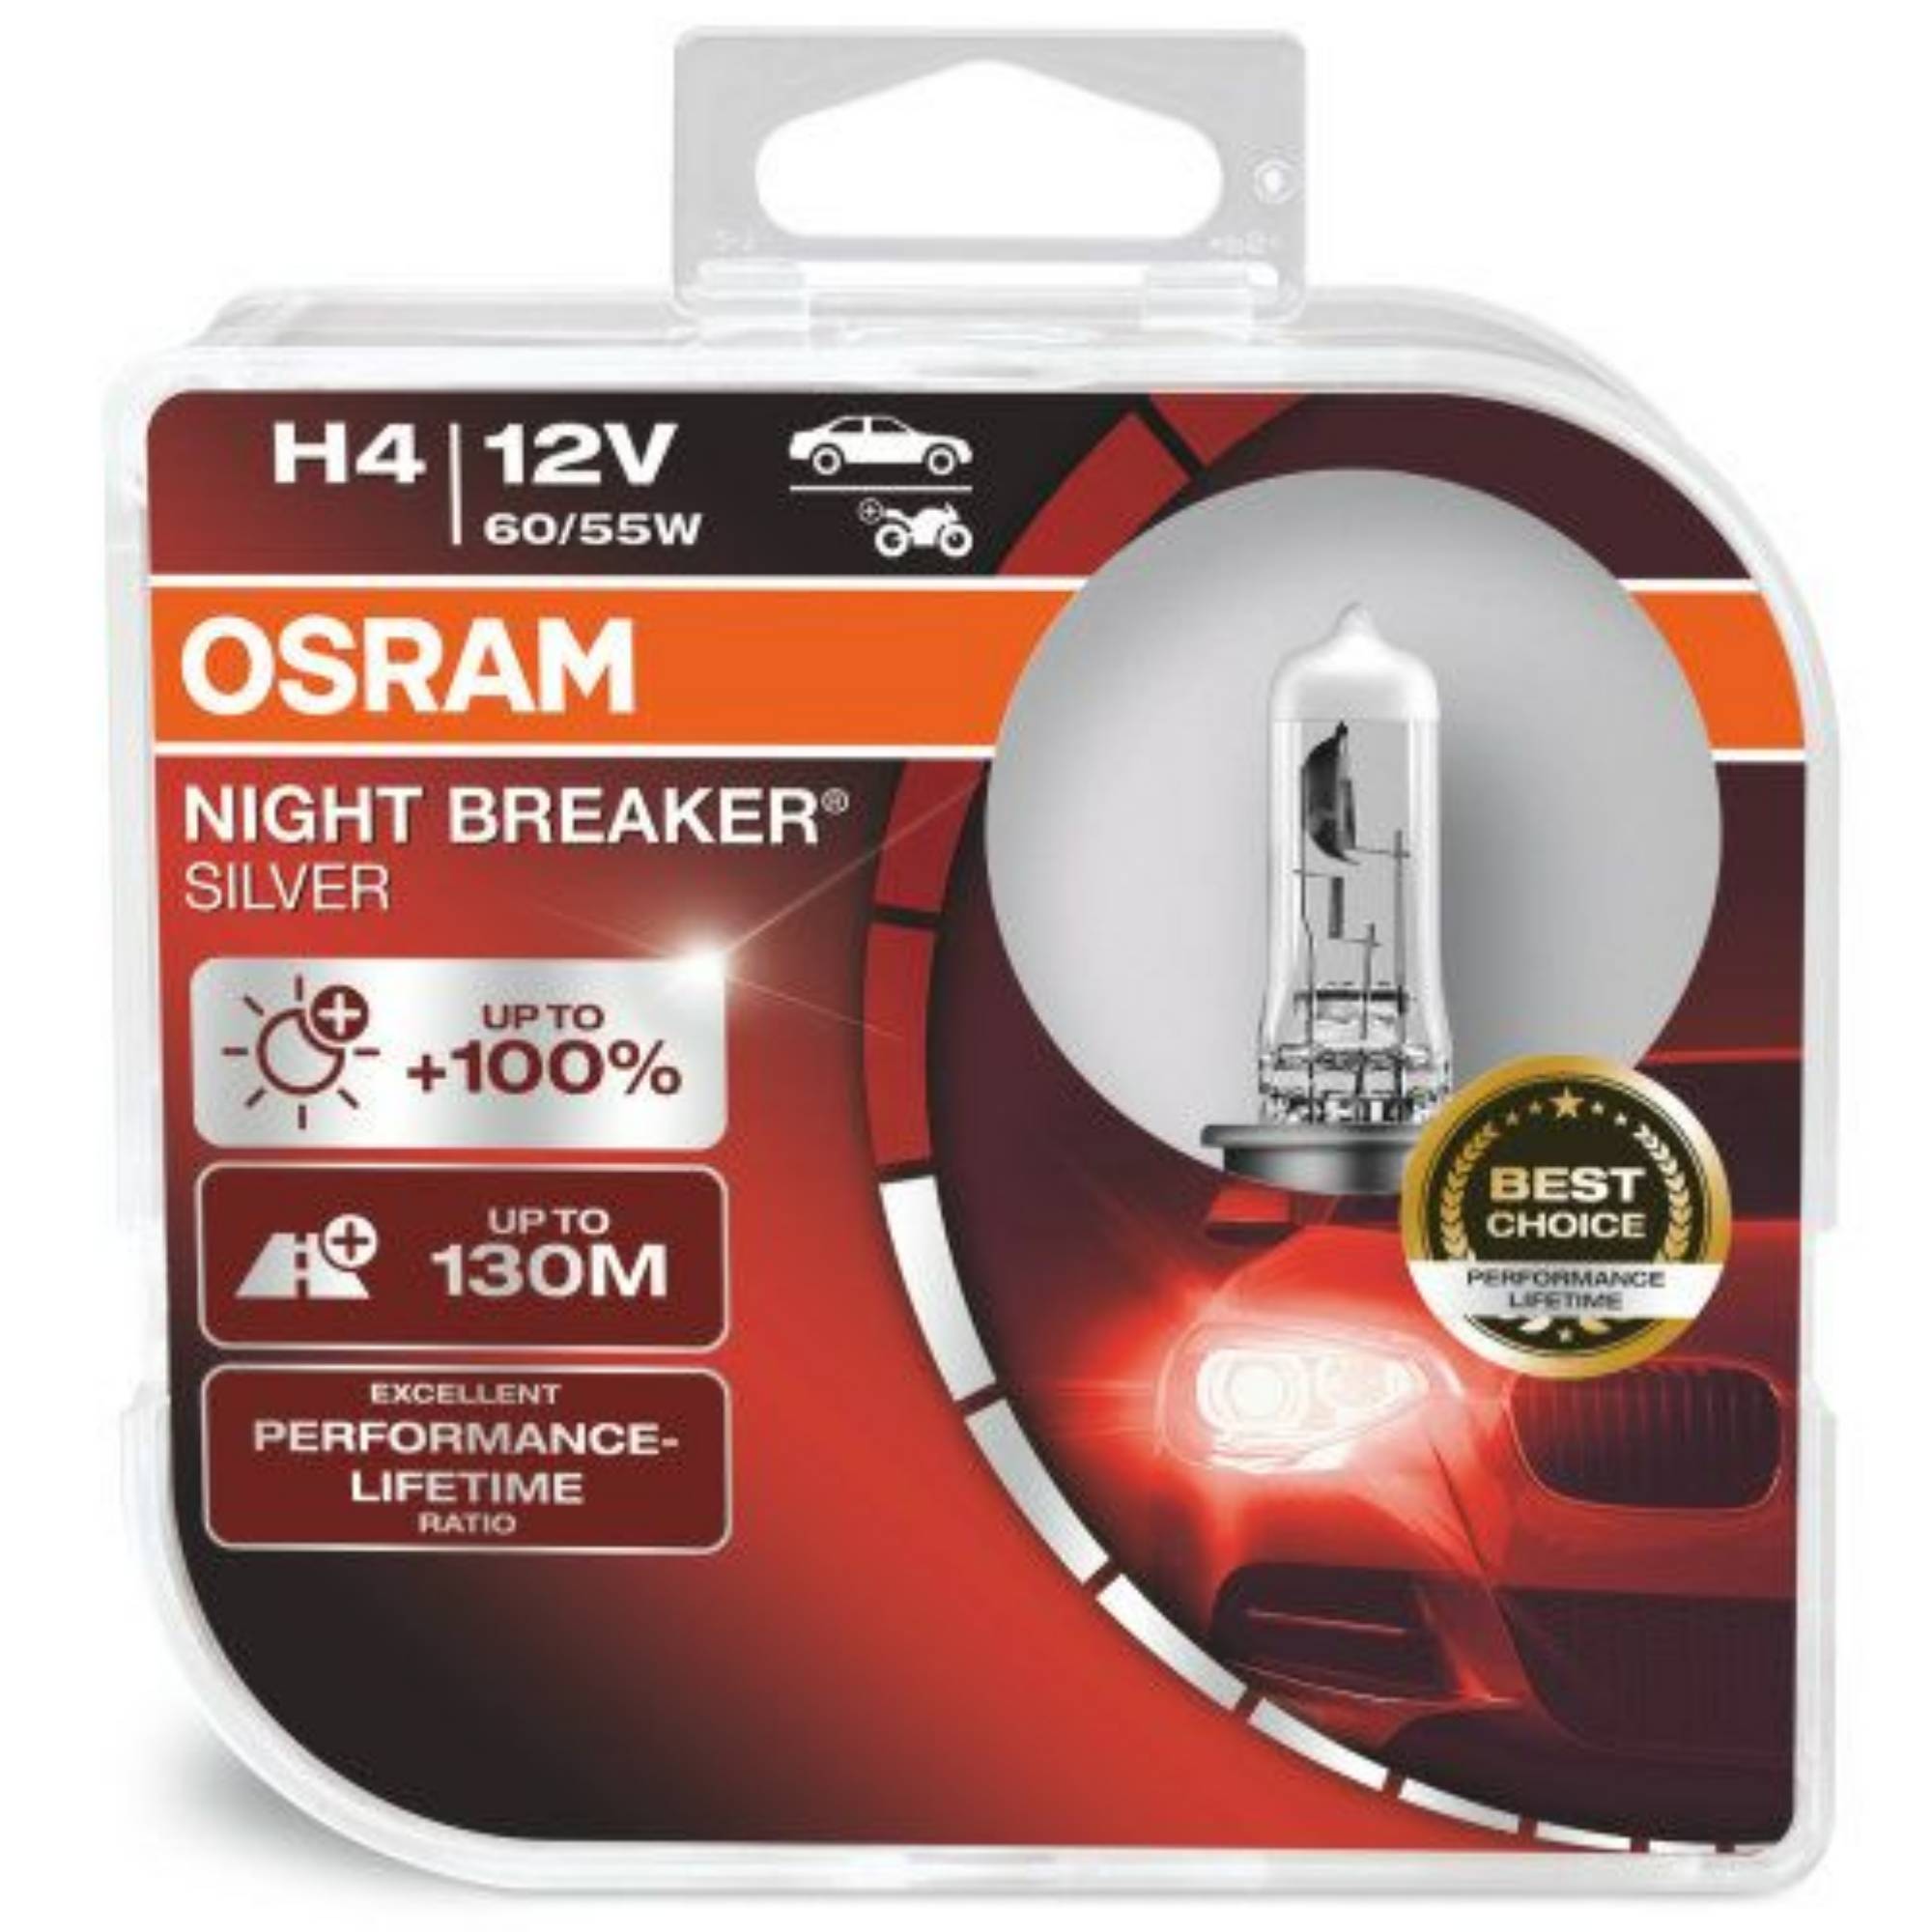 Osram H4 12V 60/55W Night Breaker Silver Twin Pack